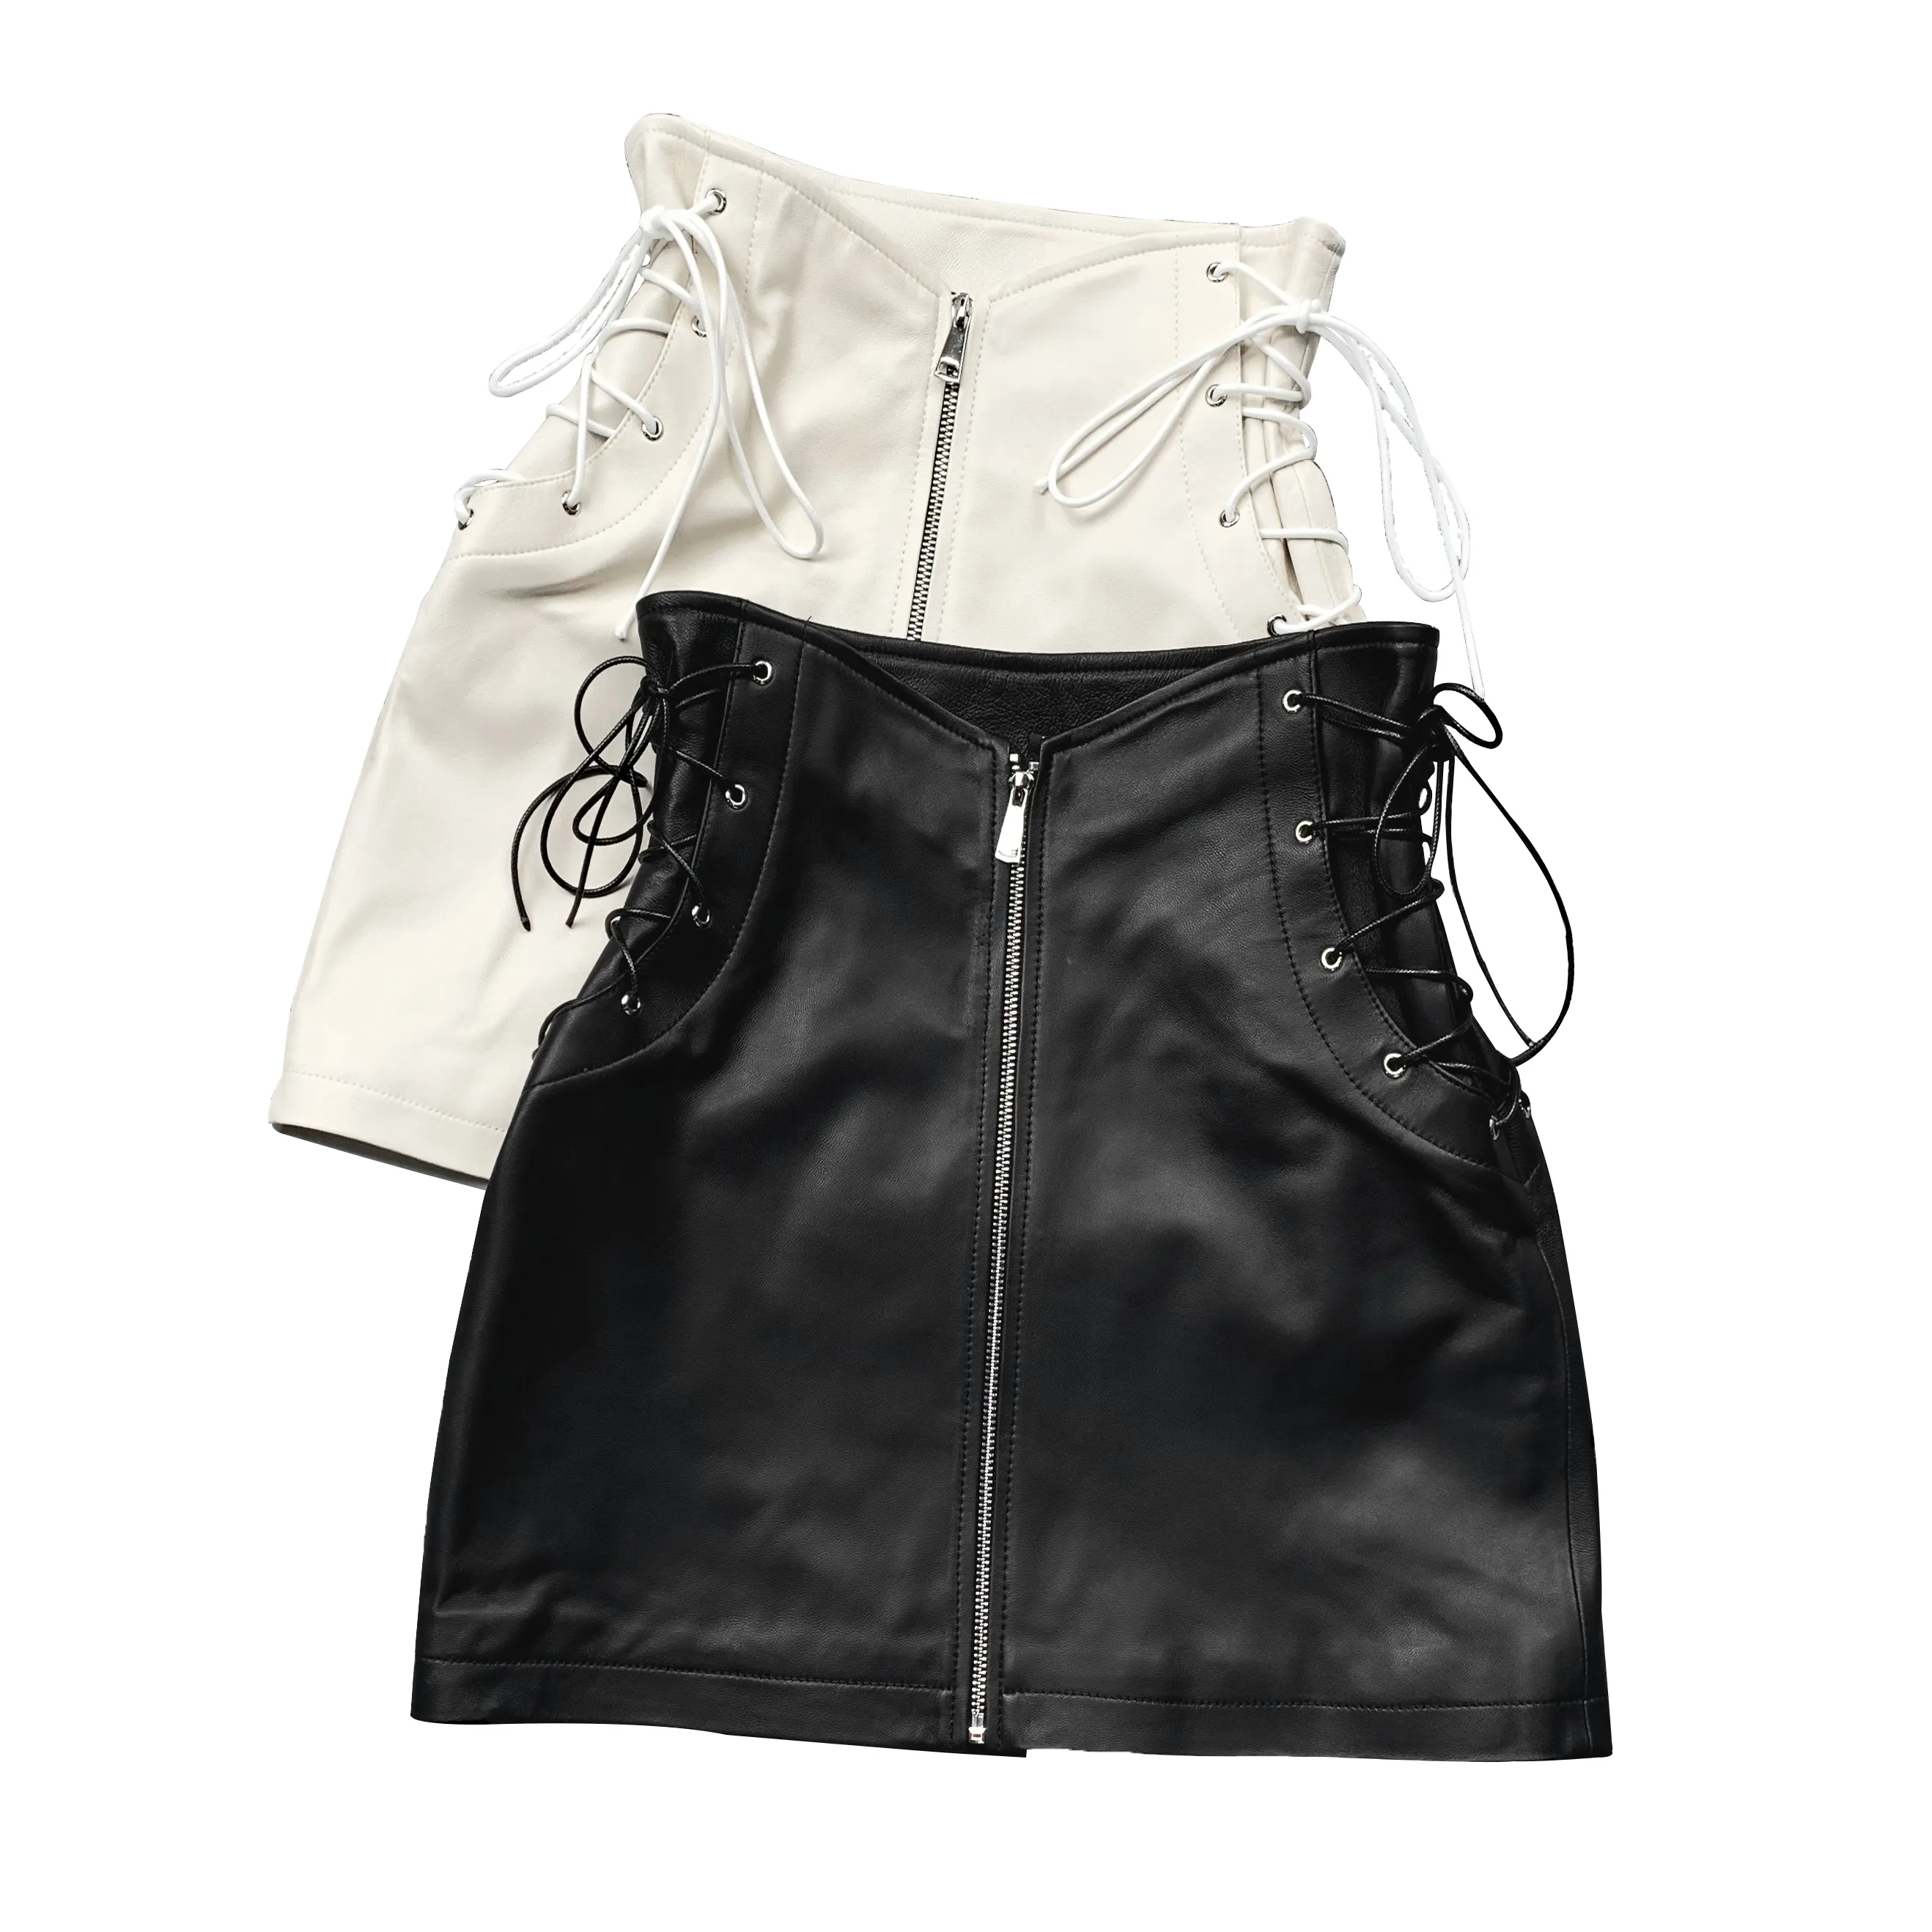 Fashion High Waist Sexy Black Female Short Skirt for Party Girl Genuine Leather Skirt Sheepskin Wrap Skirt